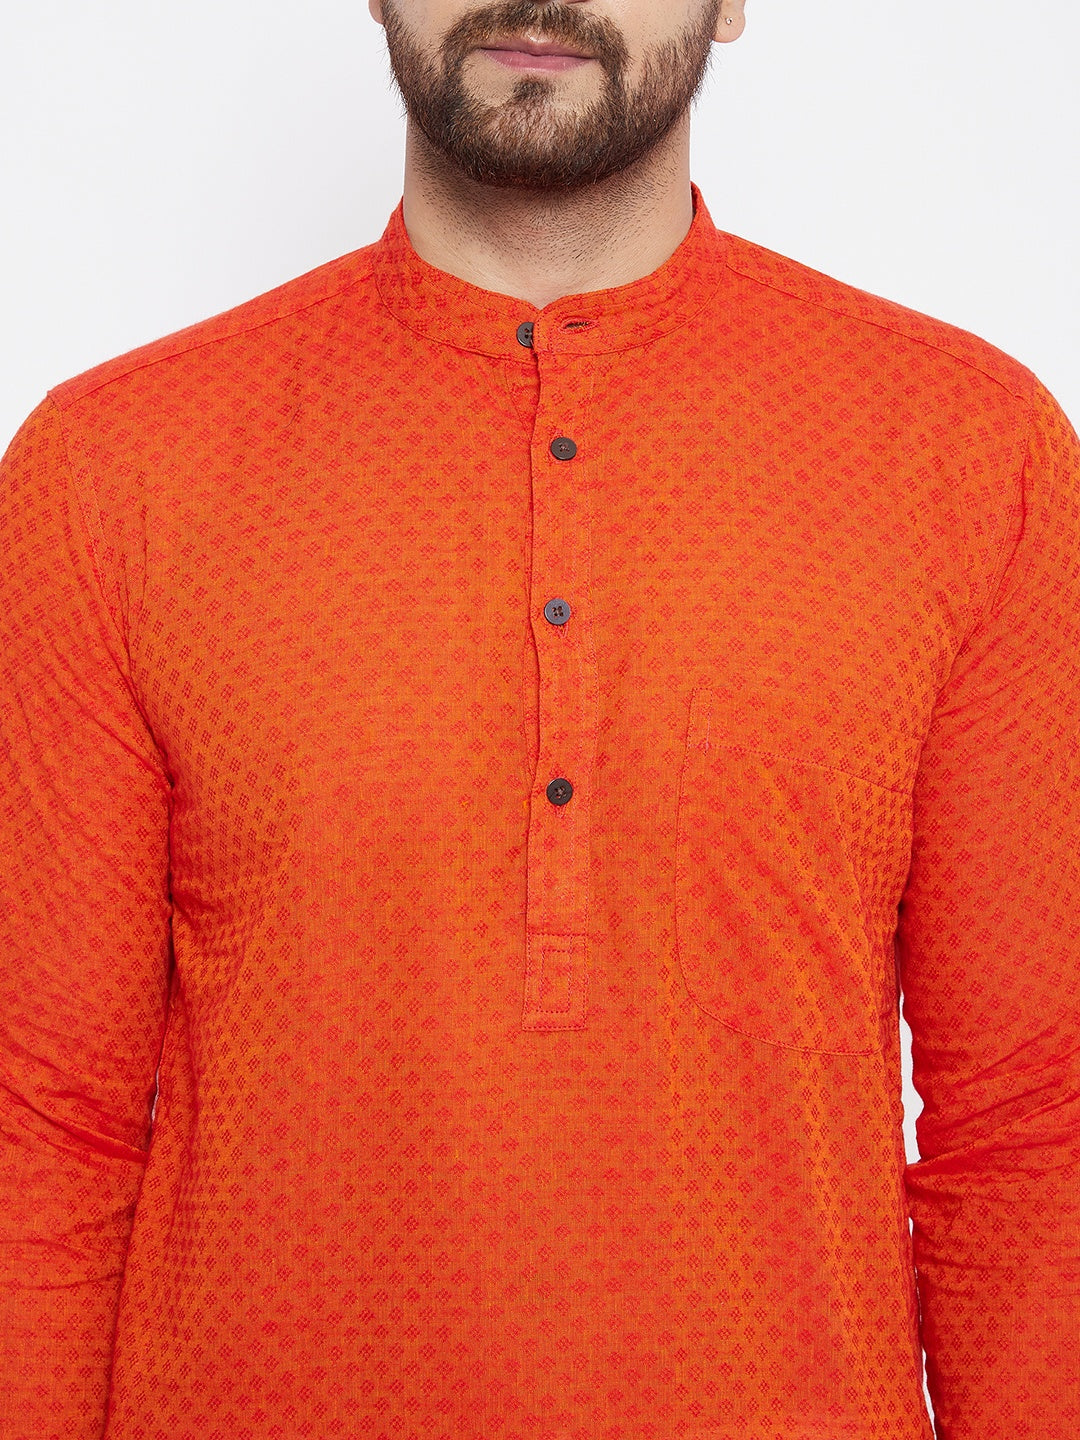 Men's Pure Cotton Orange Straight Kurta - Even Apparels